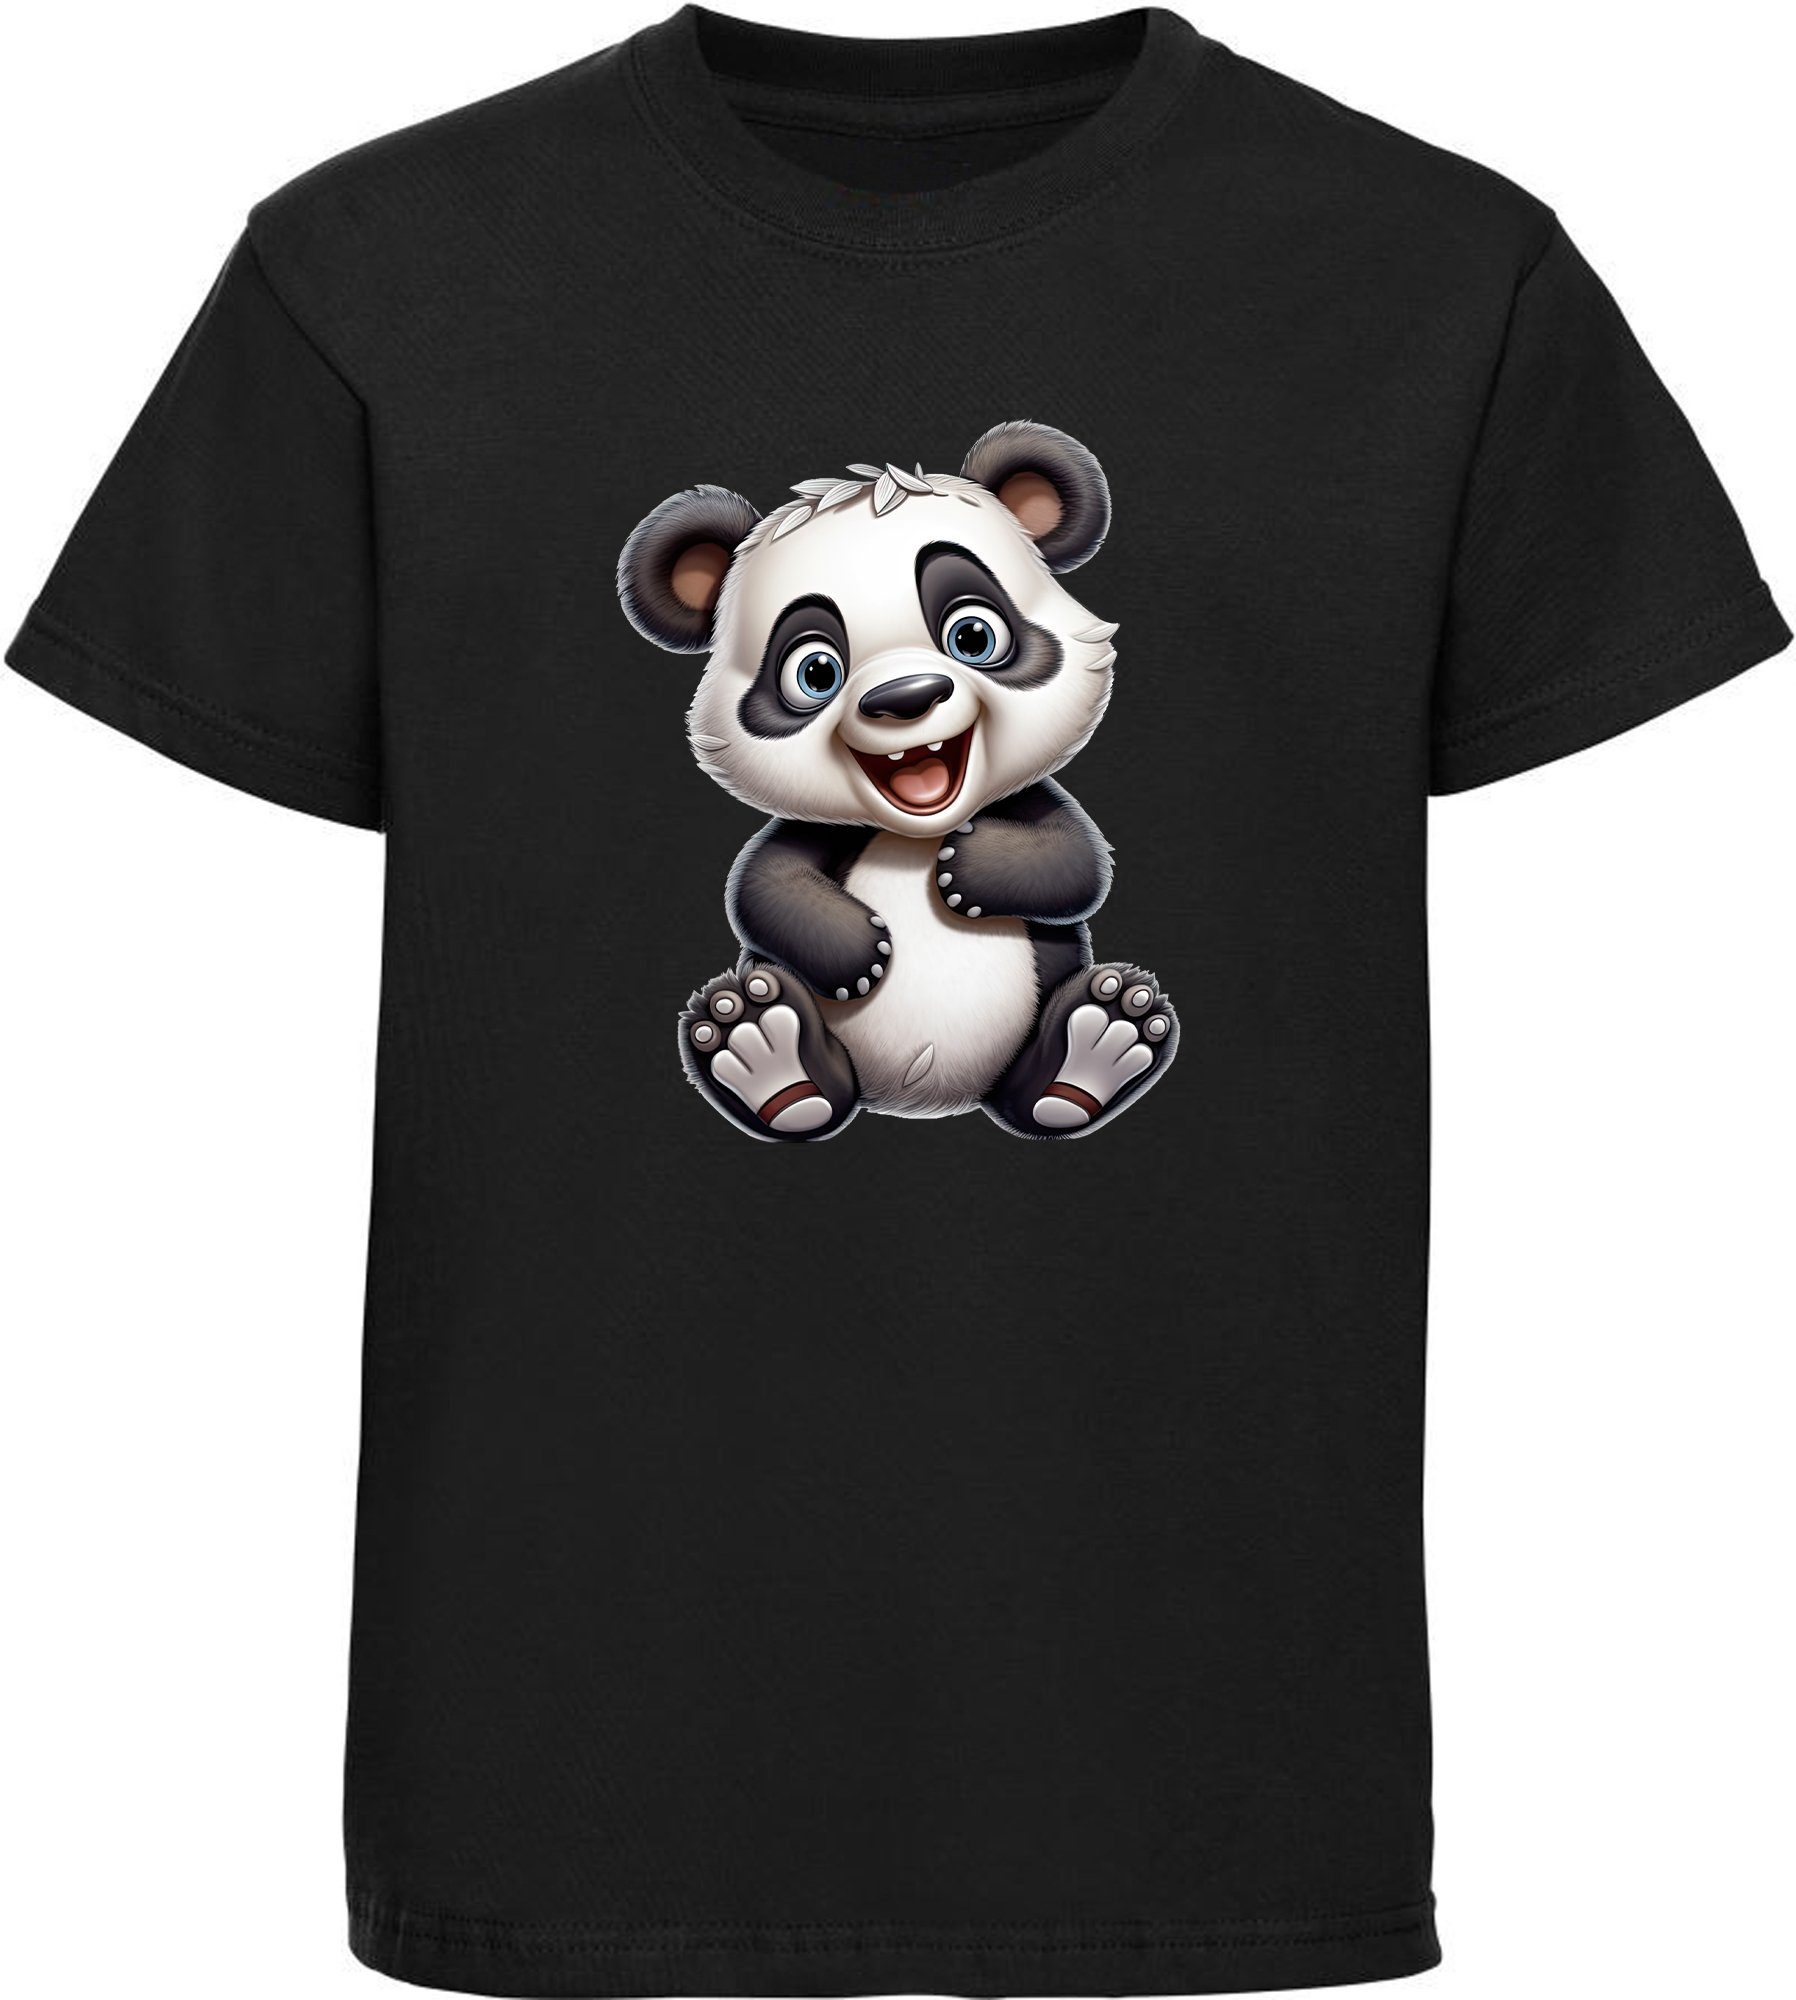 MyDesign24 T-Shirt Kinder Wildtier Print bedruckt Bär mit Baumwollshirt Shirt Panda i277 - Aufdruck, Baby schwarz